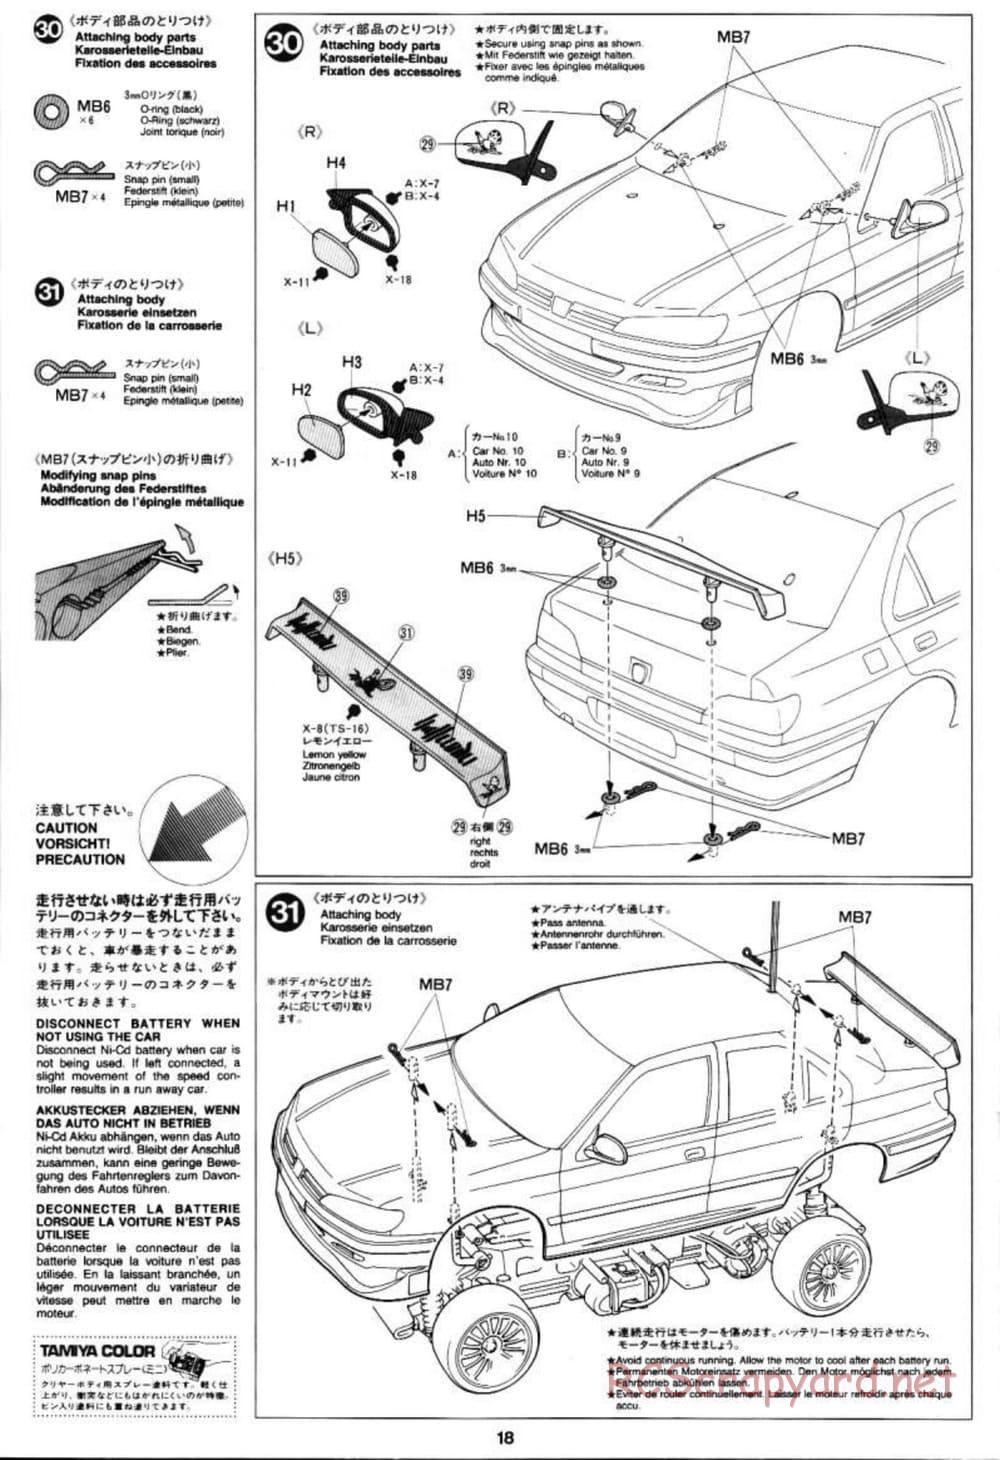 Tamiya - Peugeot 406 ST - TL-01 Chassis - Manual - Page 18